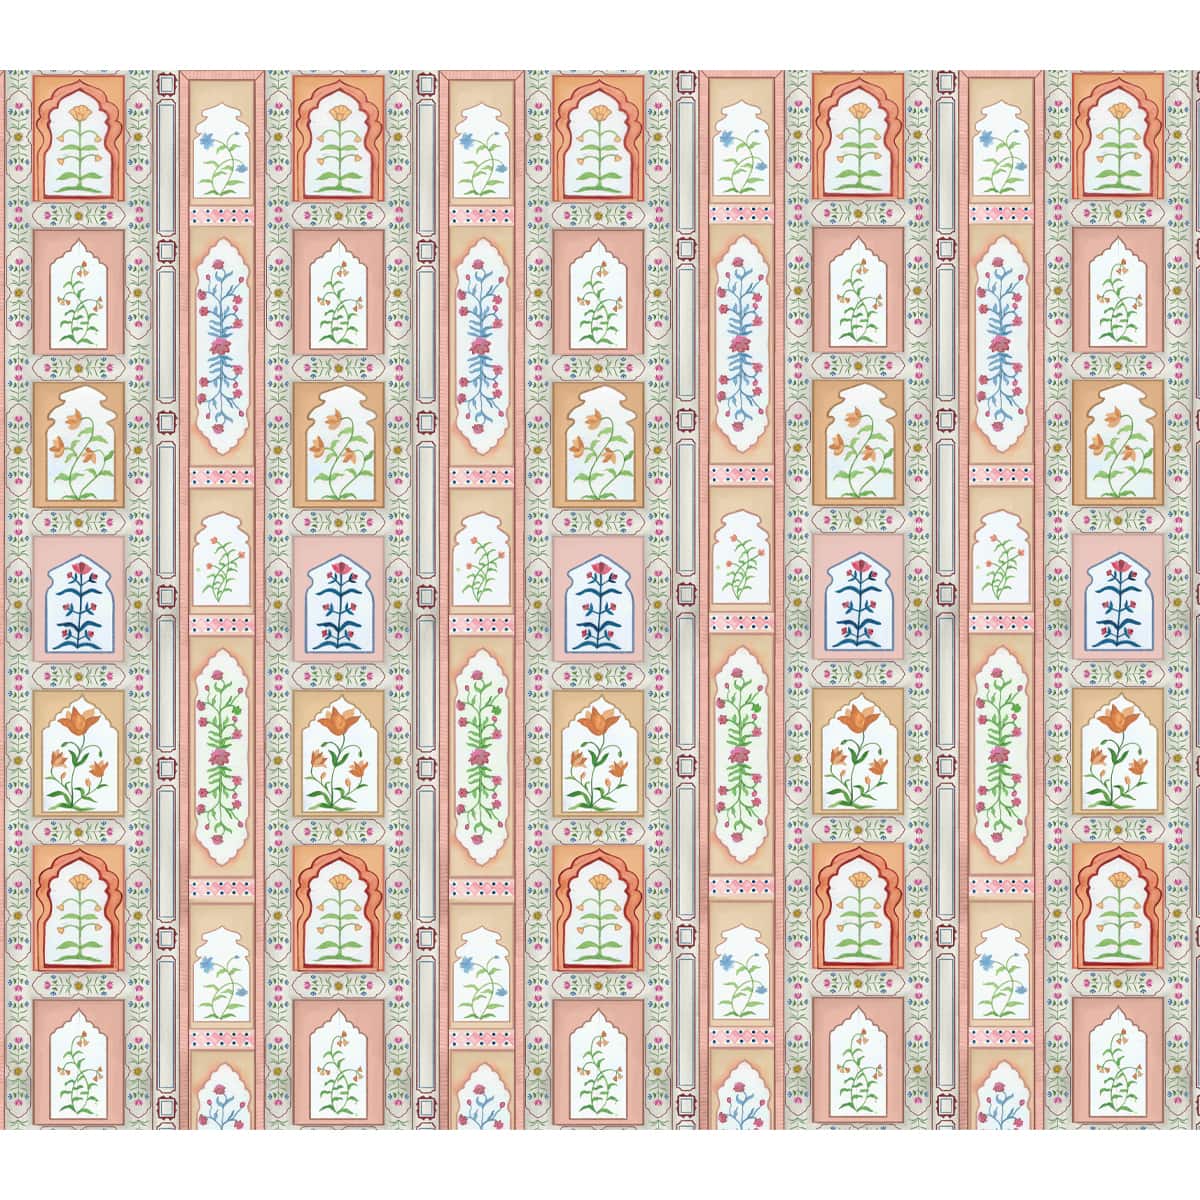 Shop Mandan Symphony of Flowers on Wallpaper